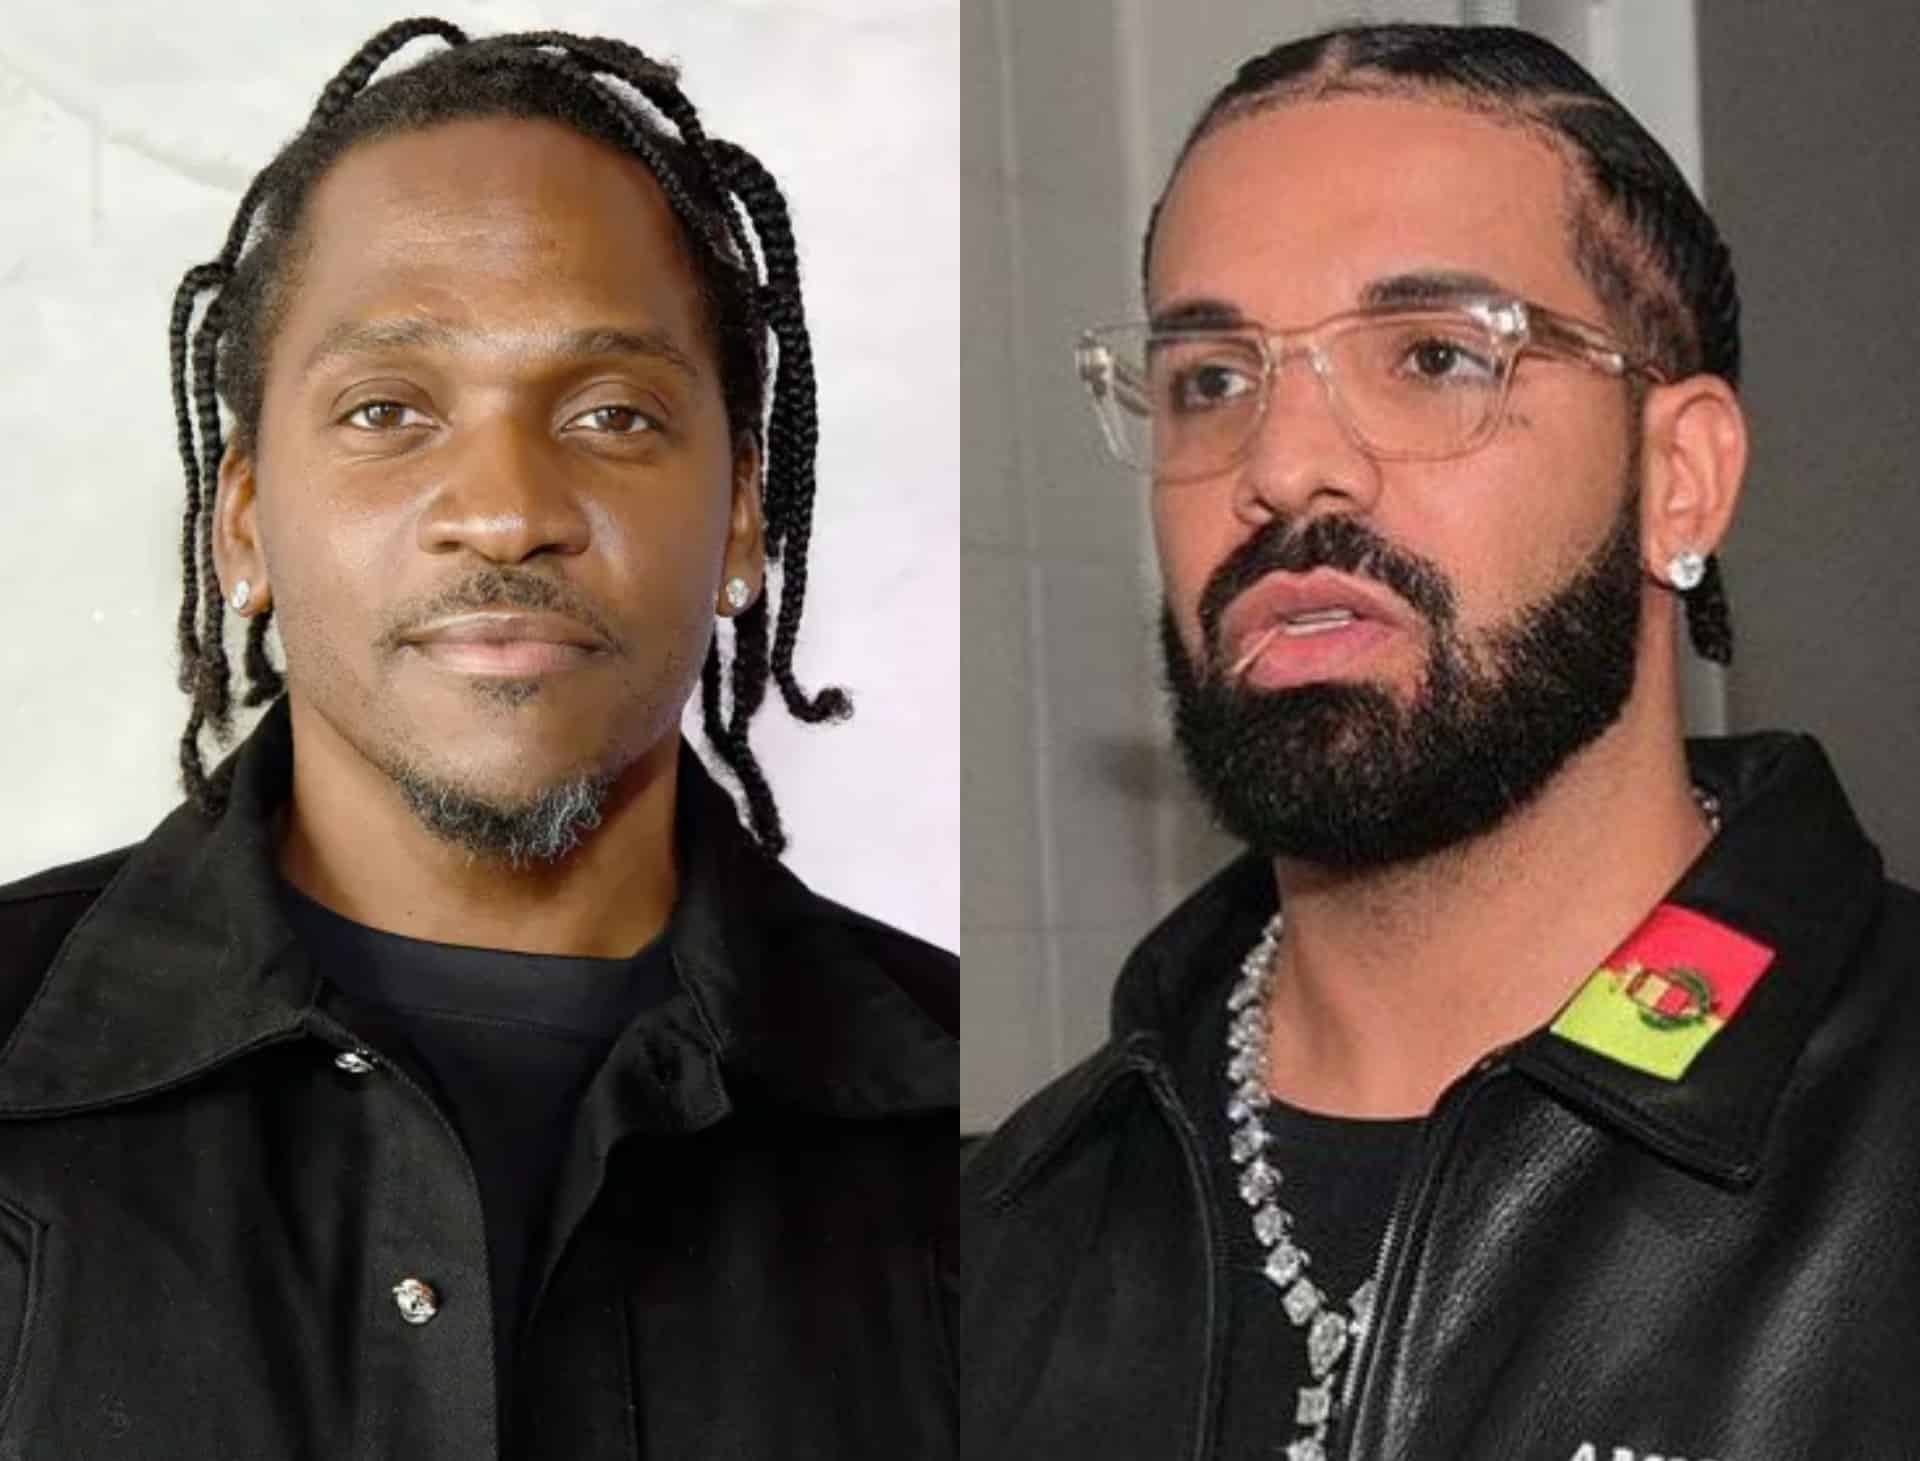 Pusha T Shades Drake Amid Ongoing Feud With Kendrick Lamar, Future & Metro Boomin